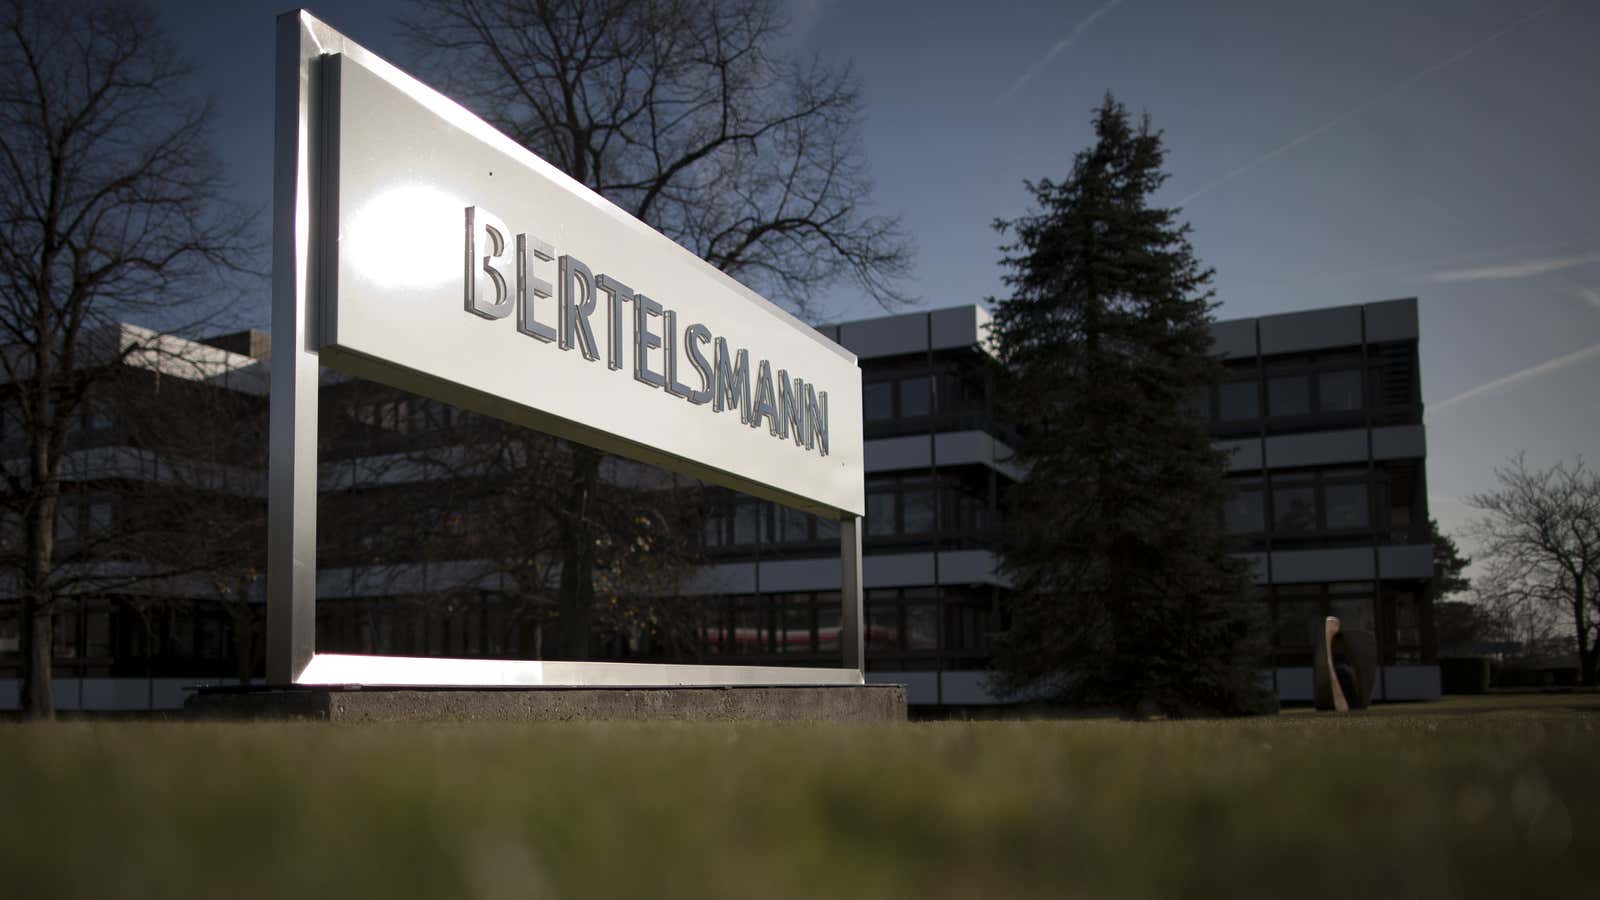 Bertelsmann will put more money in emerging markets.